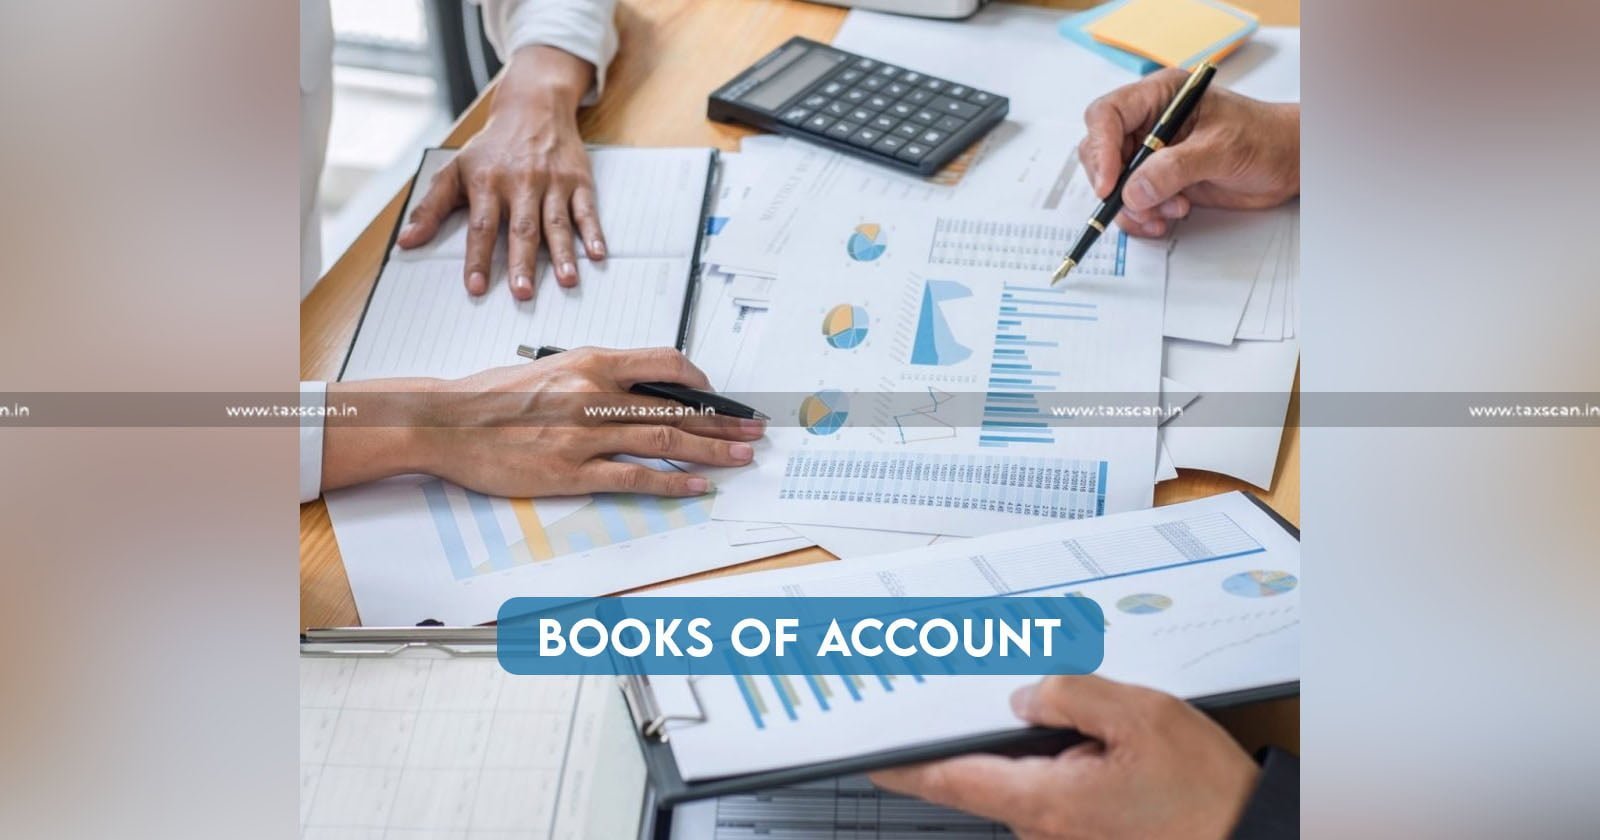 Addition - AO - Books of Accounts - ITAT - No Addition - AO without Rejecting Books of Accounts - ITAT - taxscan